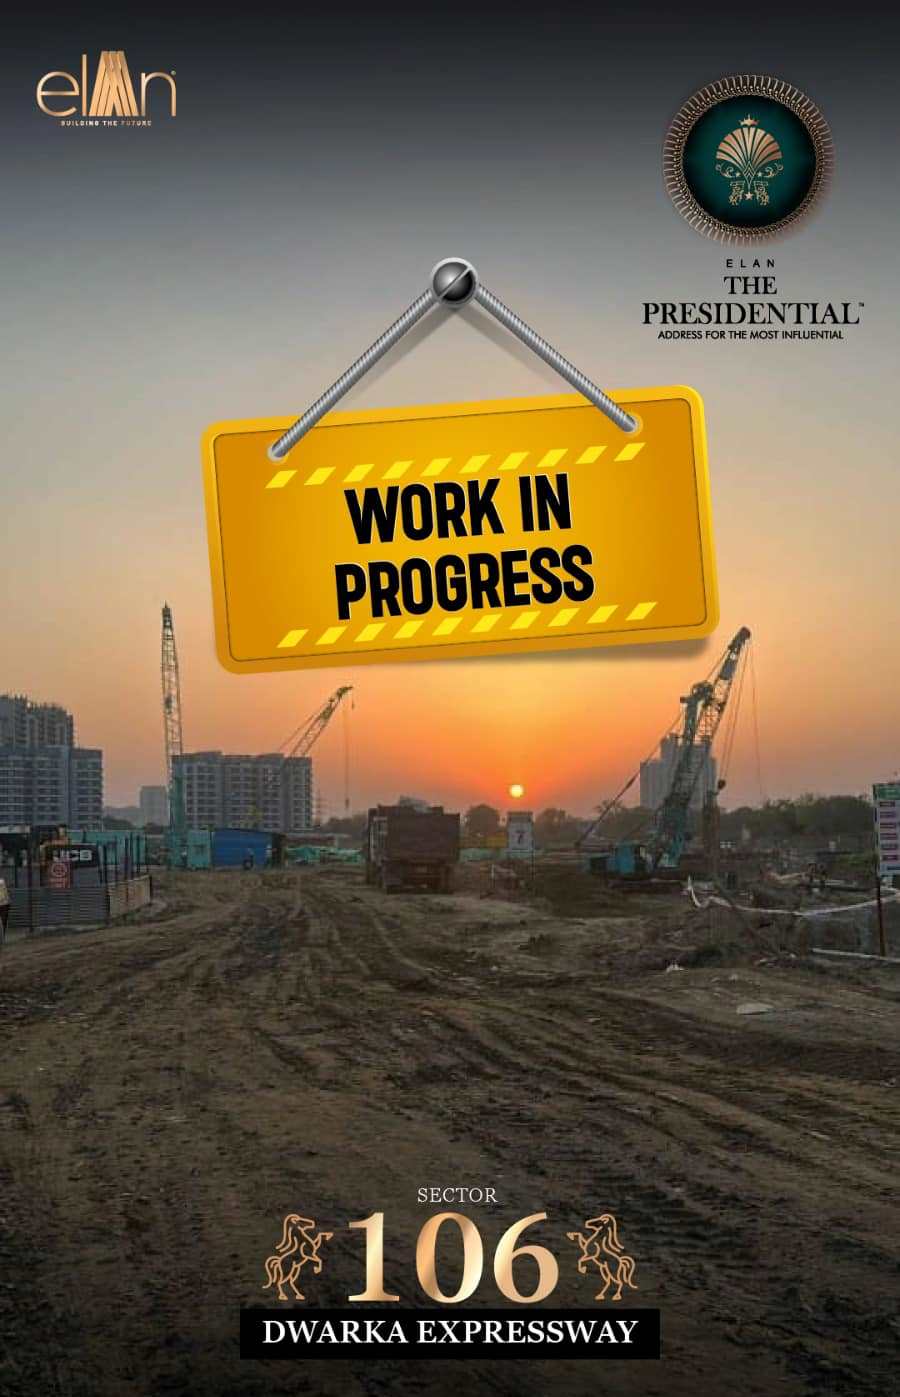 Work in progress at Elan The Presidential in Dwarka Expressway, Gurgaon Update